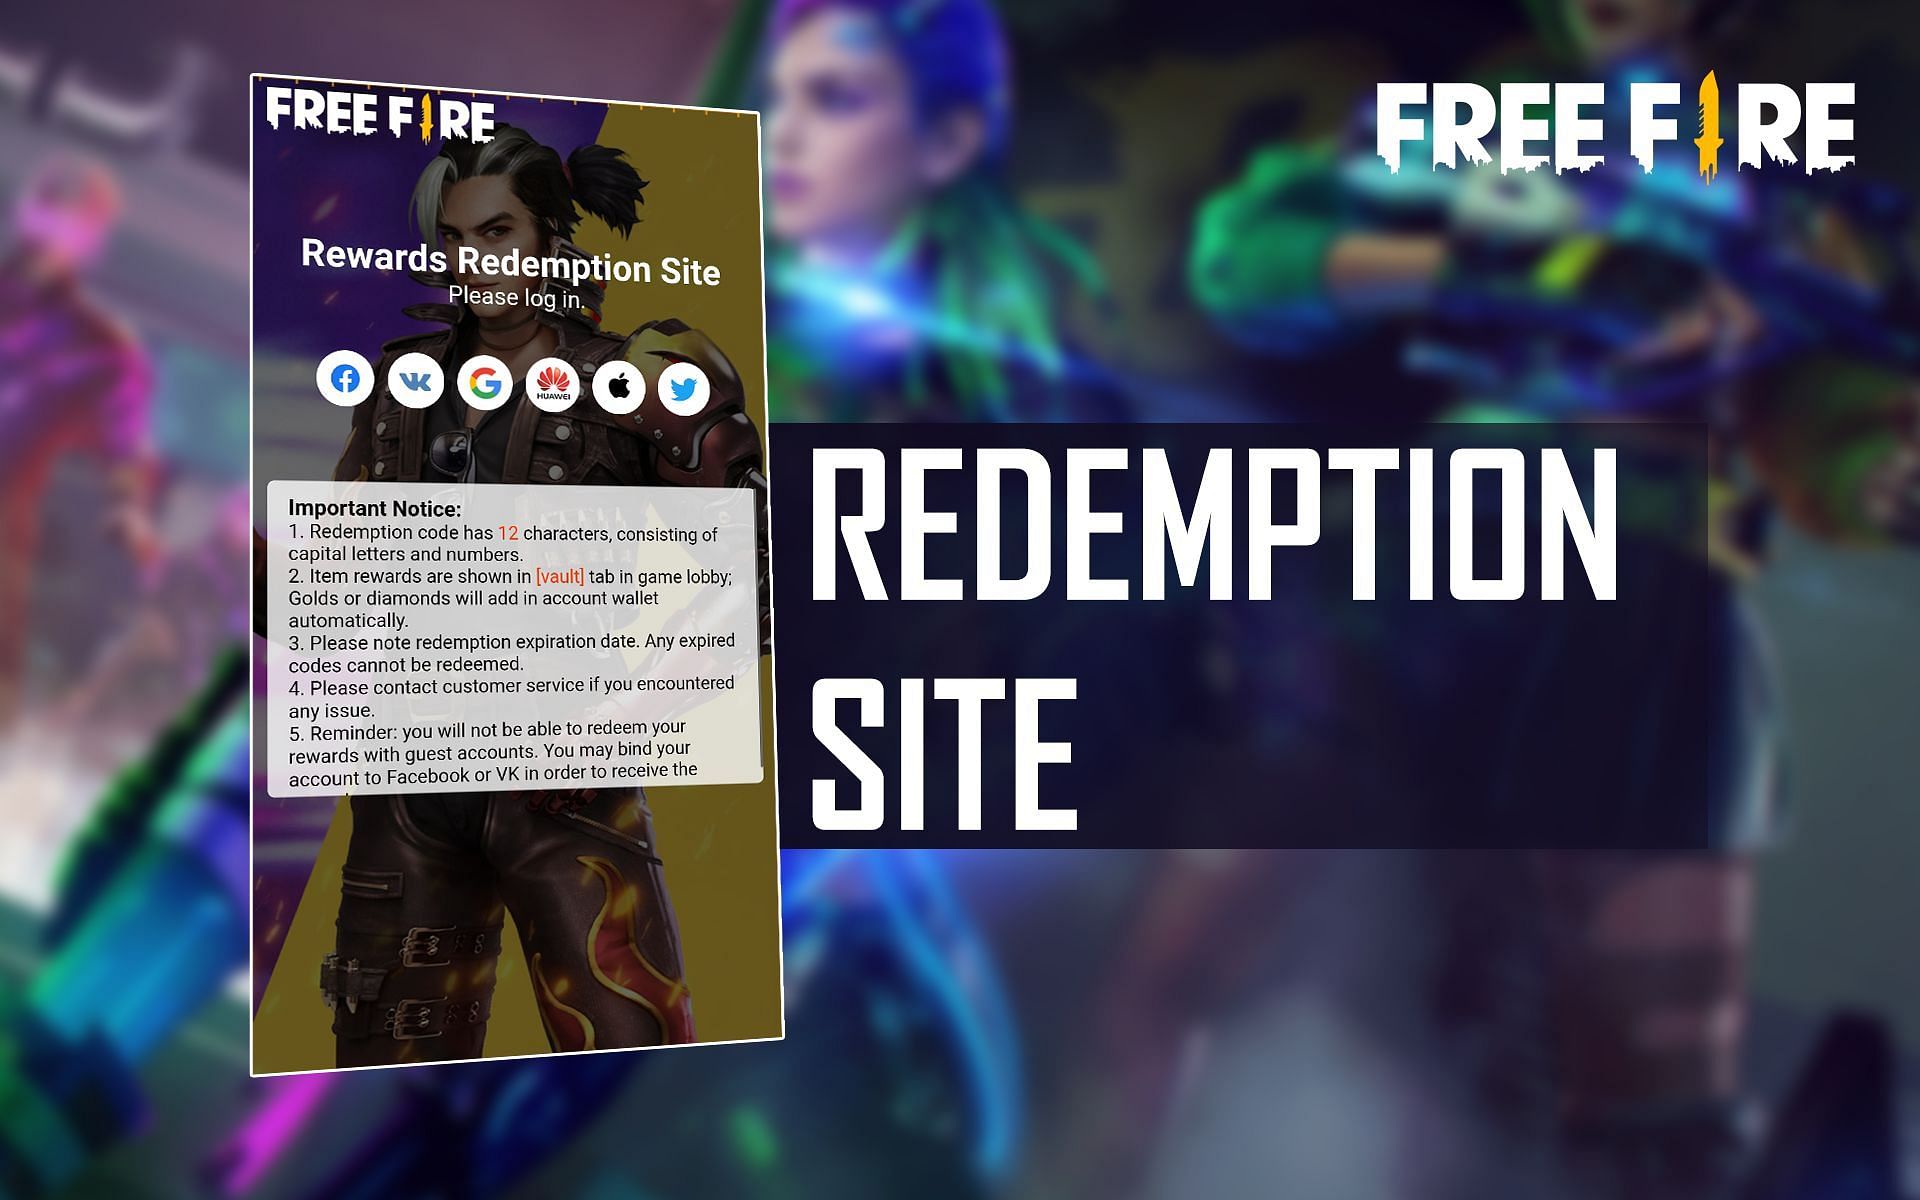 Reward ff. Free Fire